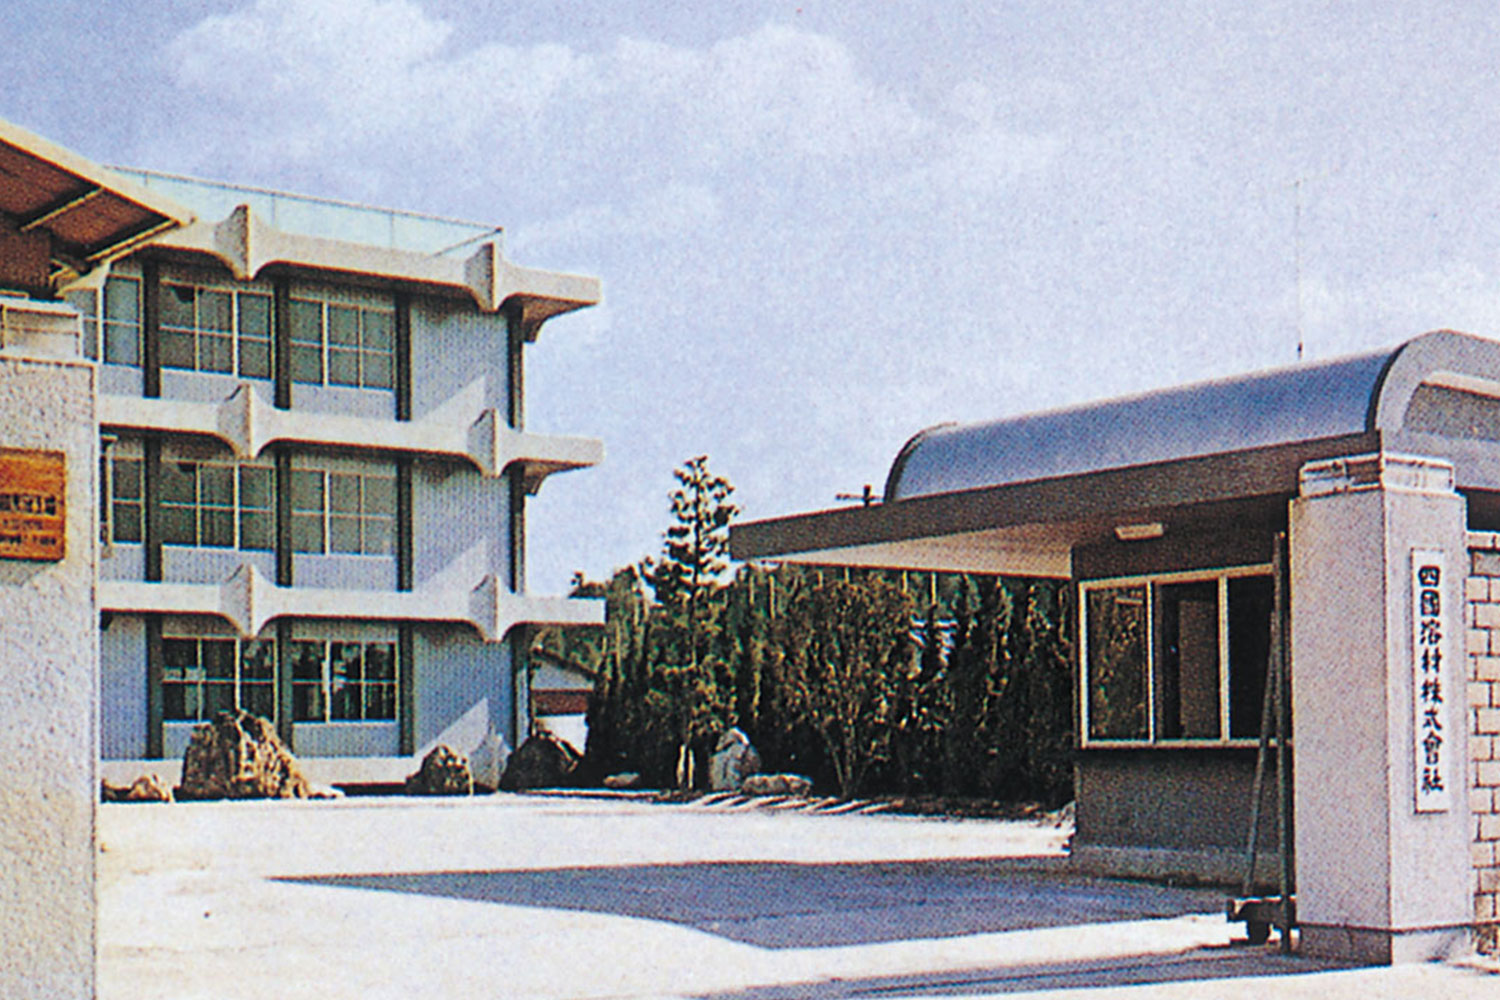 Headquarters (1968)